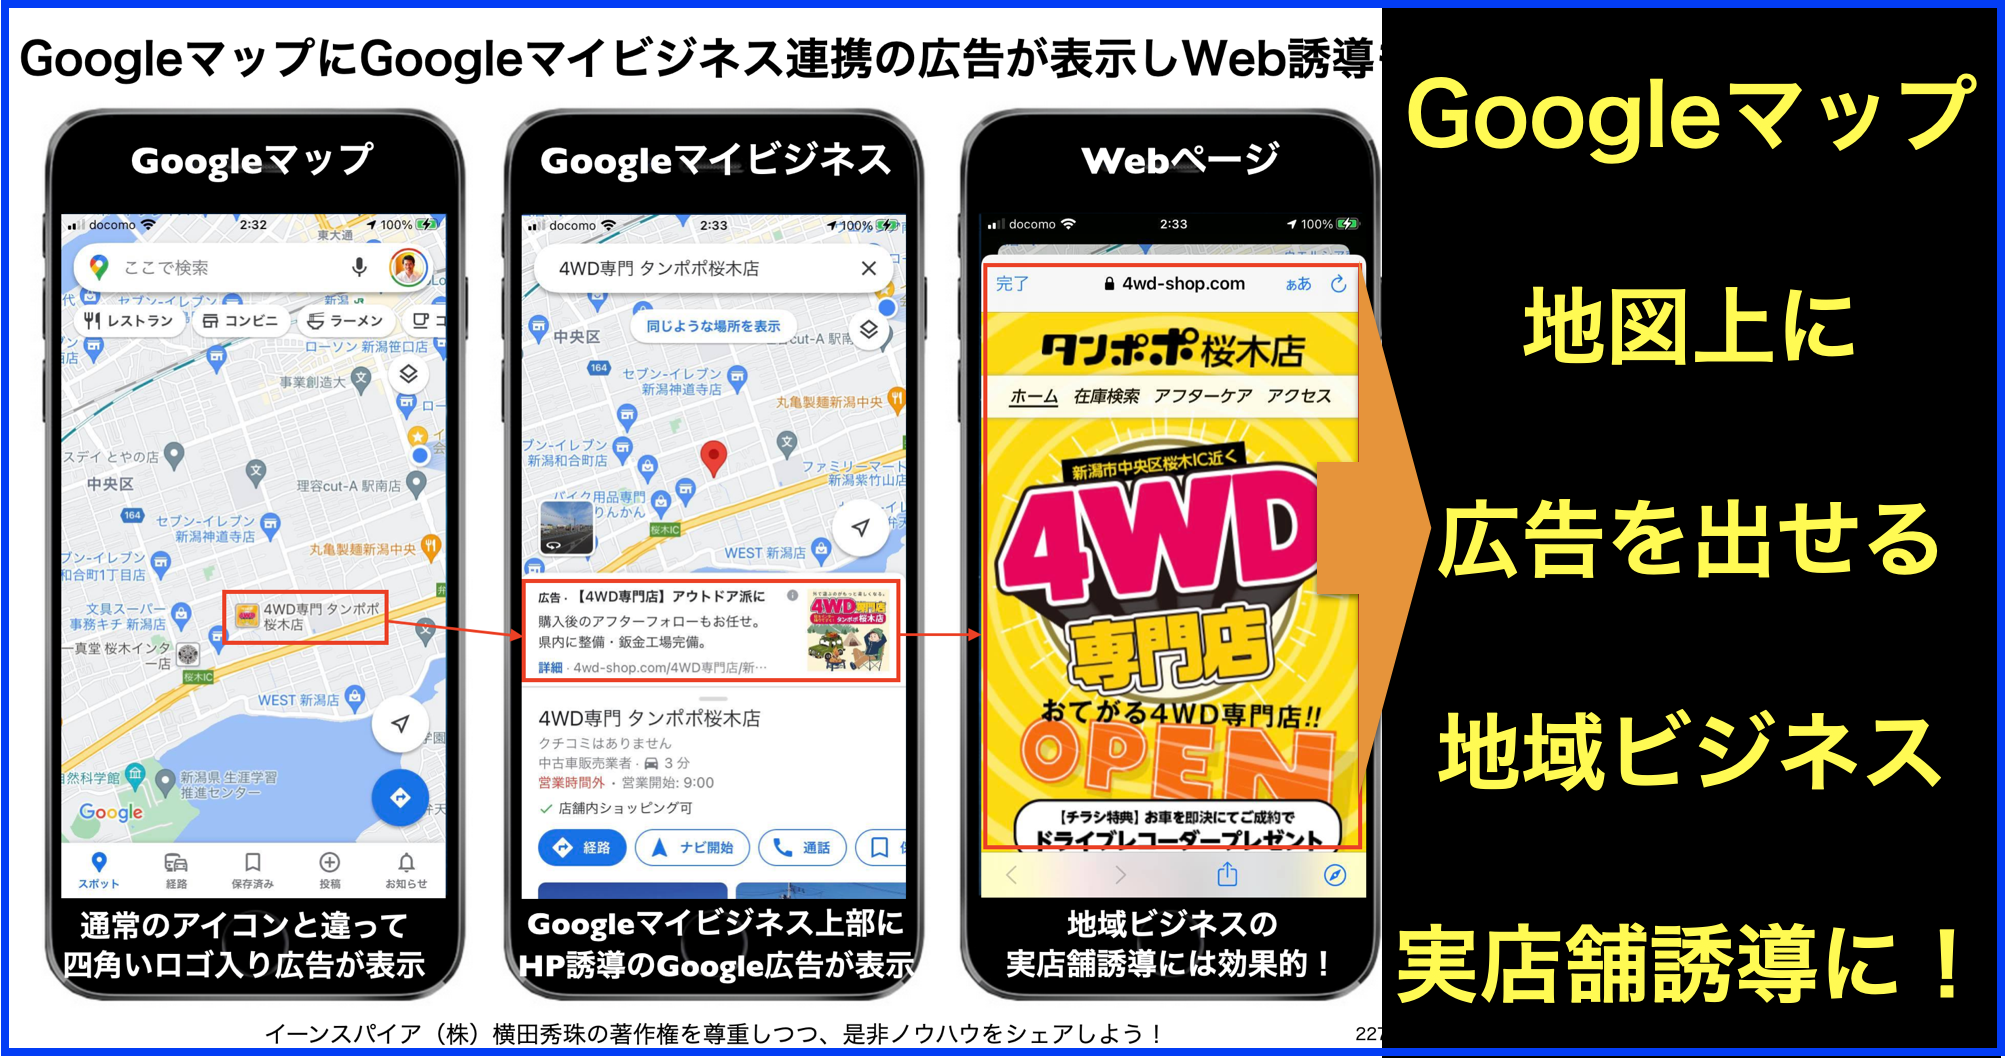 GoogleマップにGoogleマイビジネス連携ピン型広告が表示